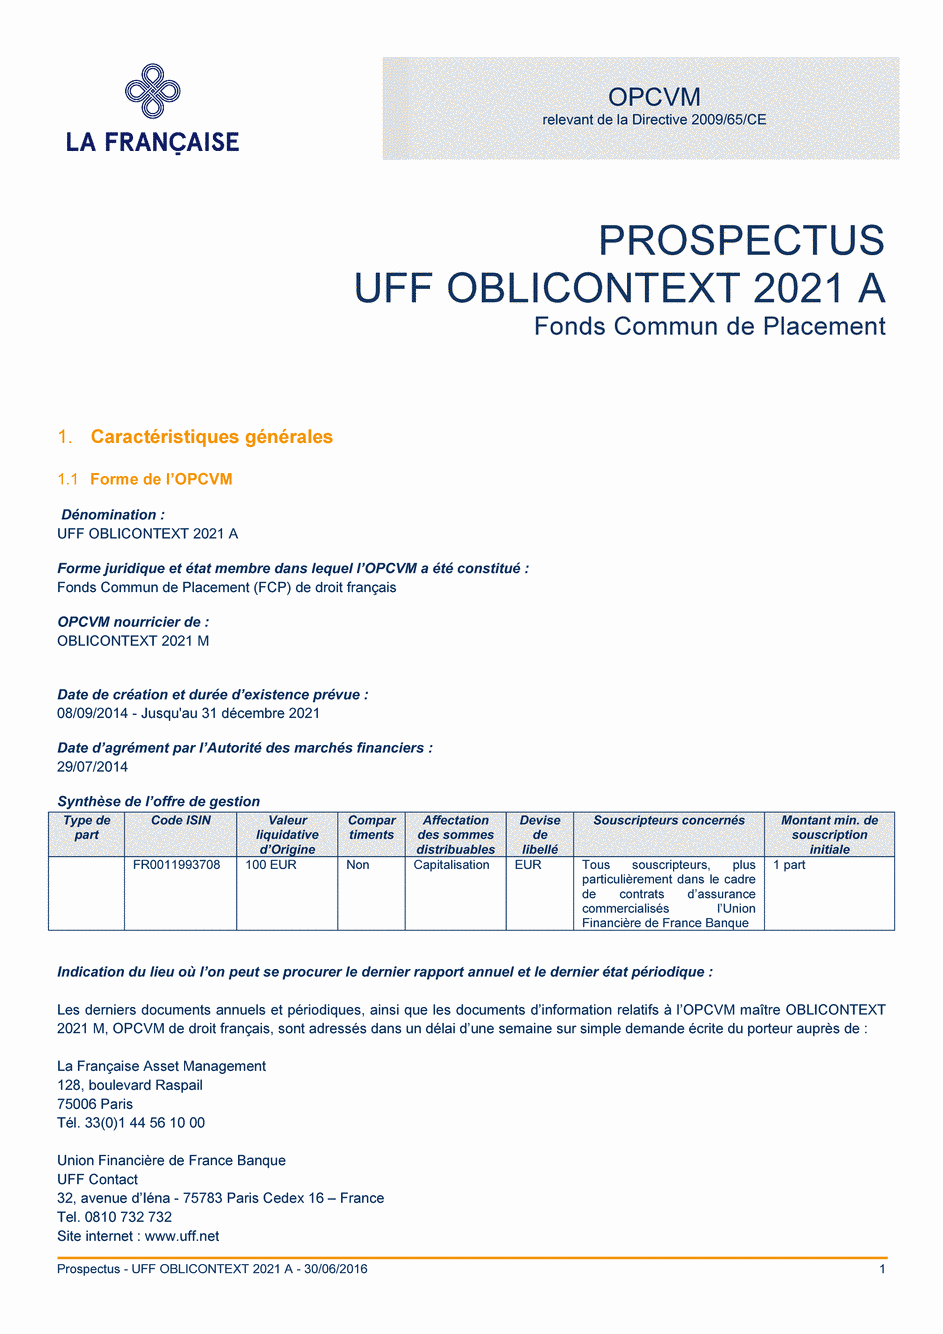 Prospectus UFF OBLICONTEXT 2021 A - 30/06/2016 - Français